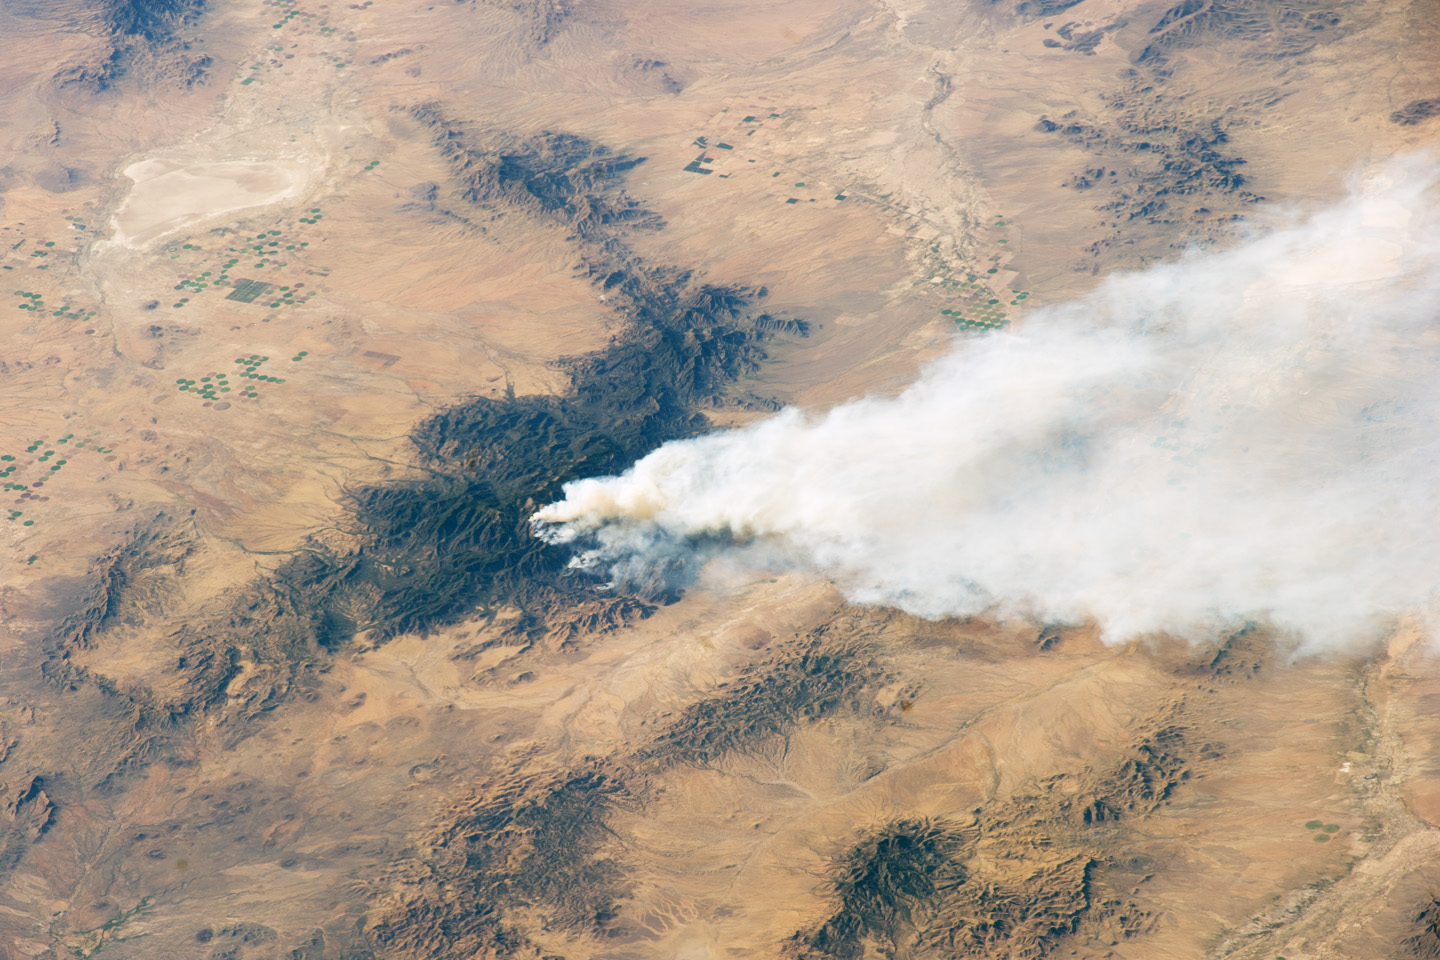 Horseshoe 2 Fire, Arizona - related image preview